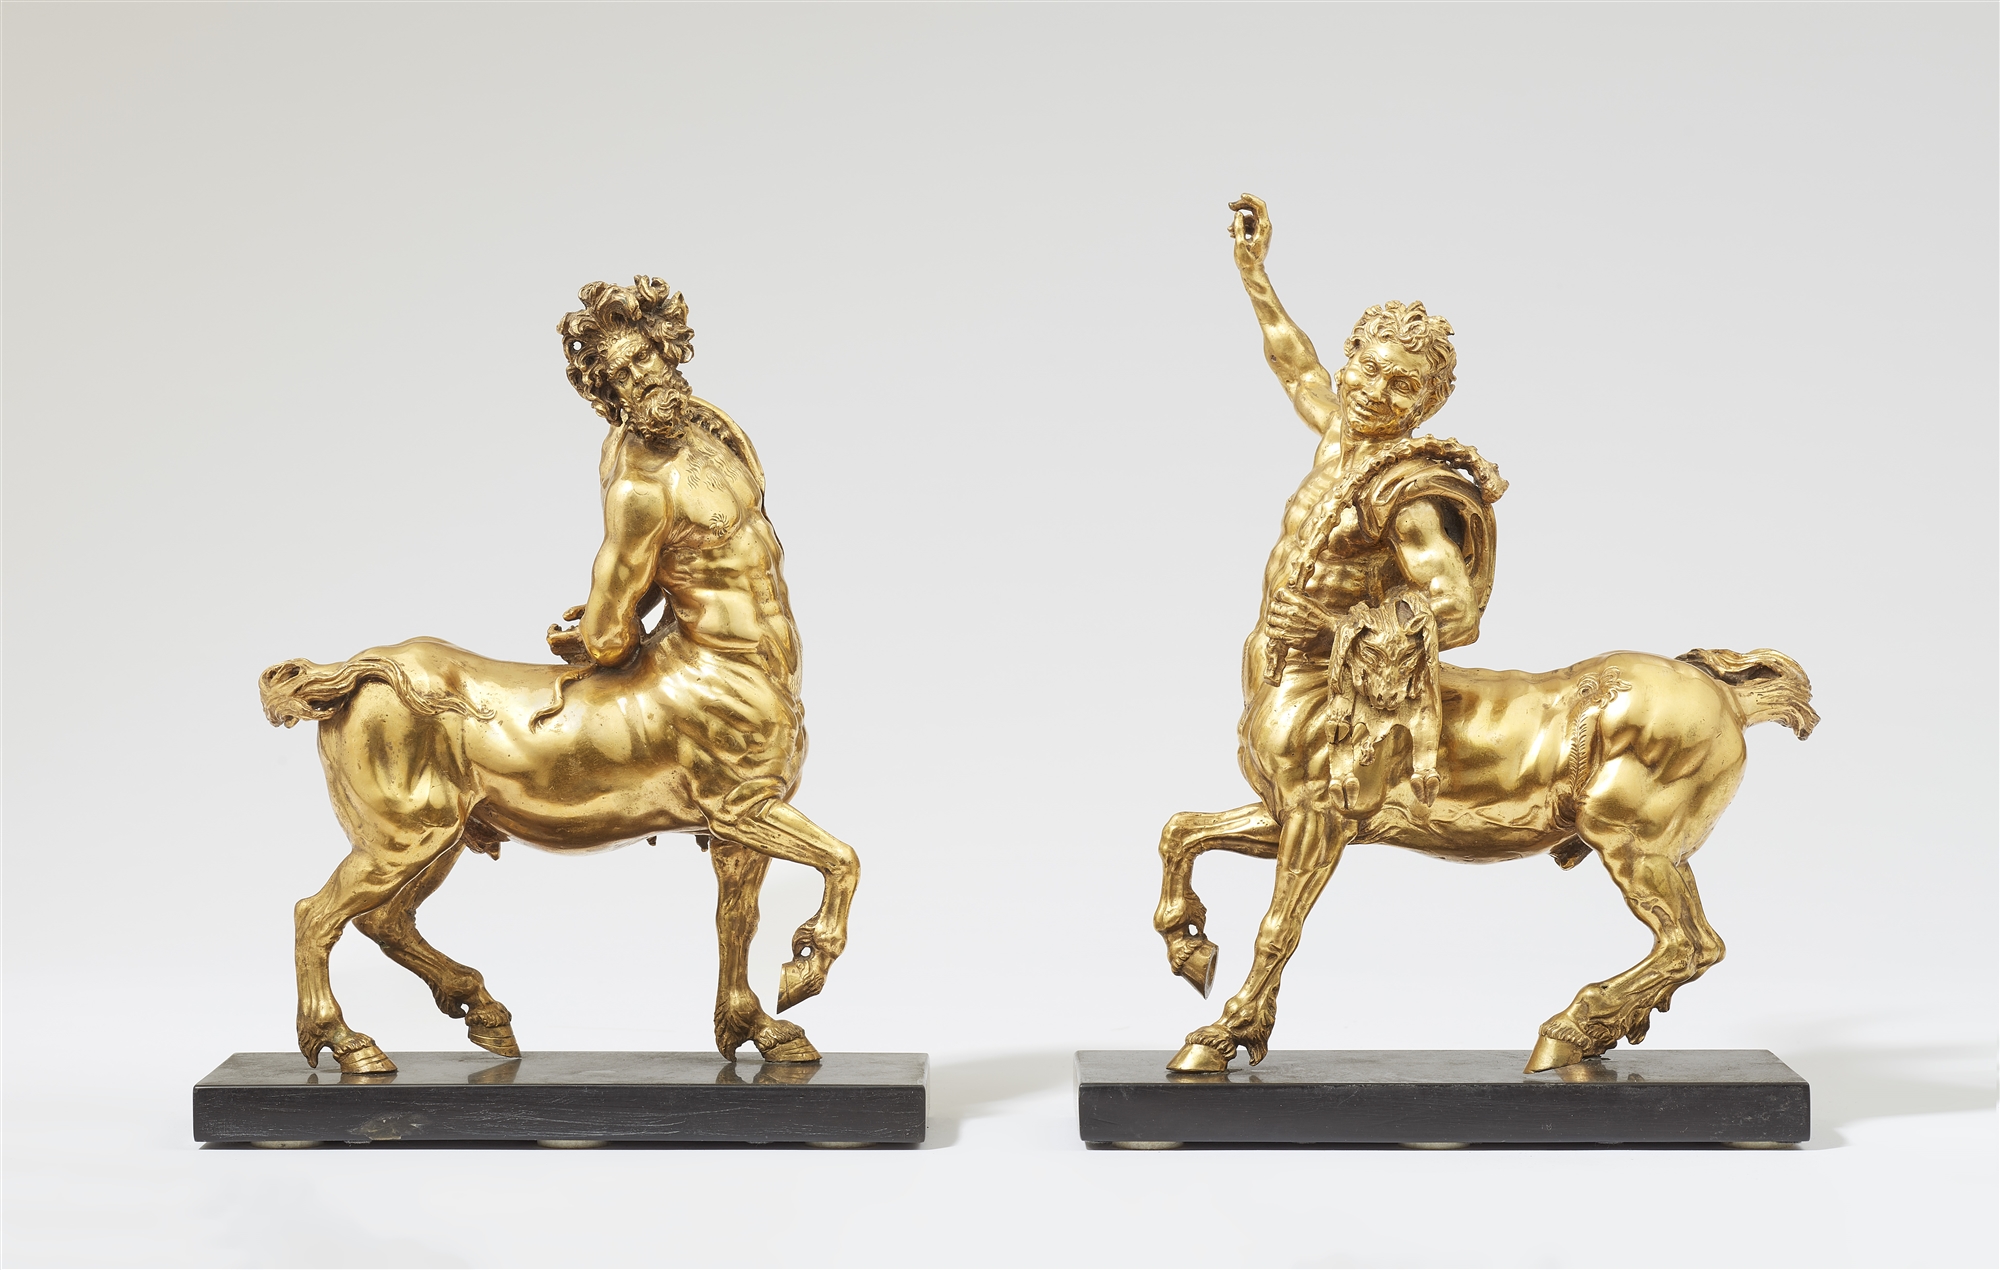 Diminutive ormolu copies of the Furietti centaurs